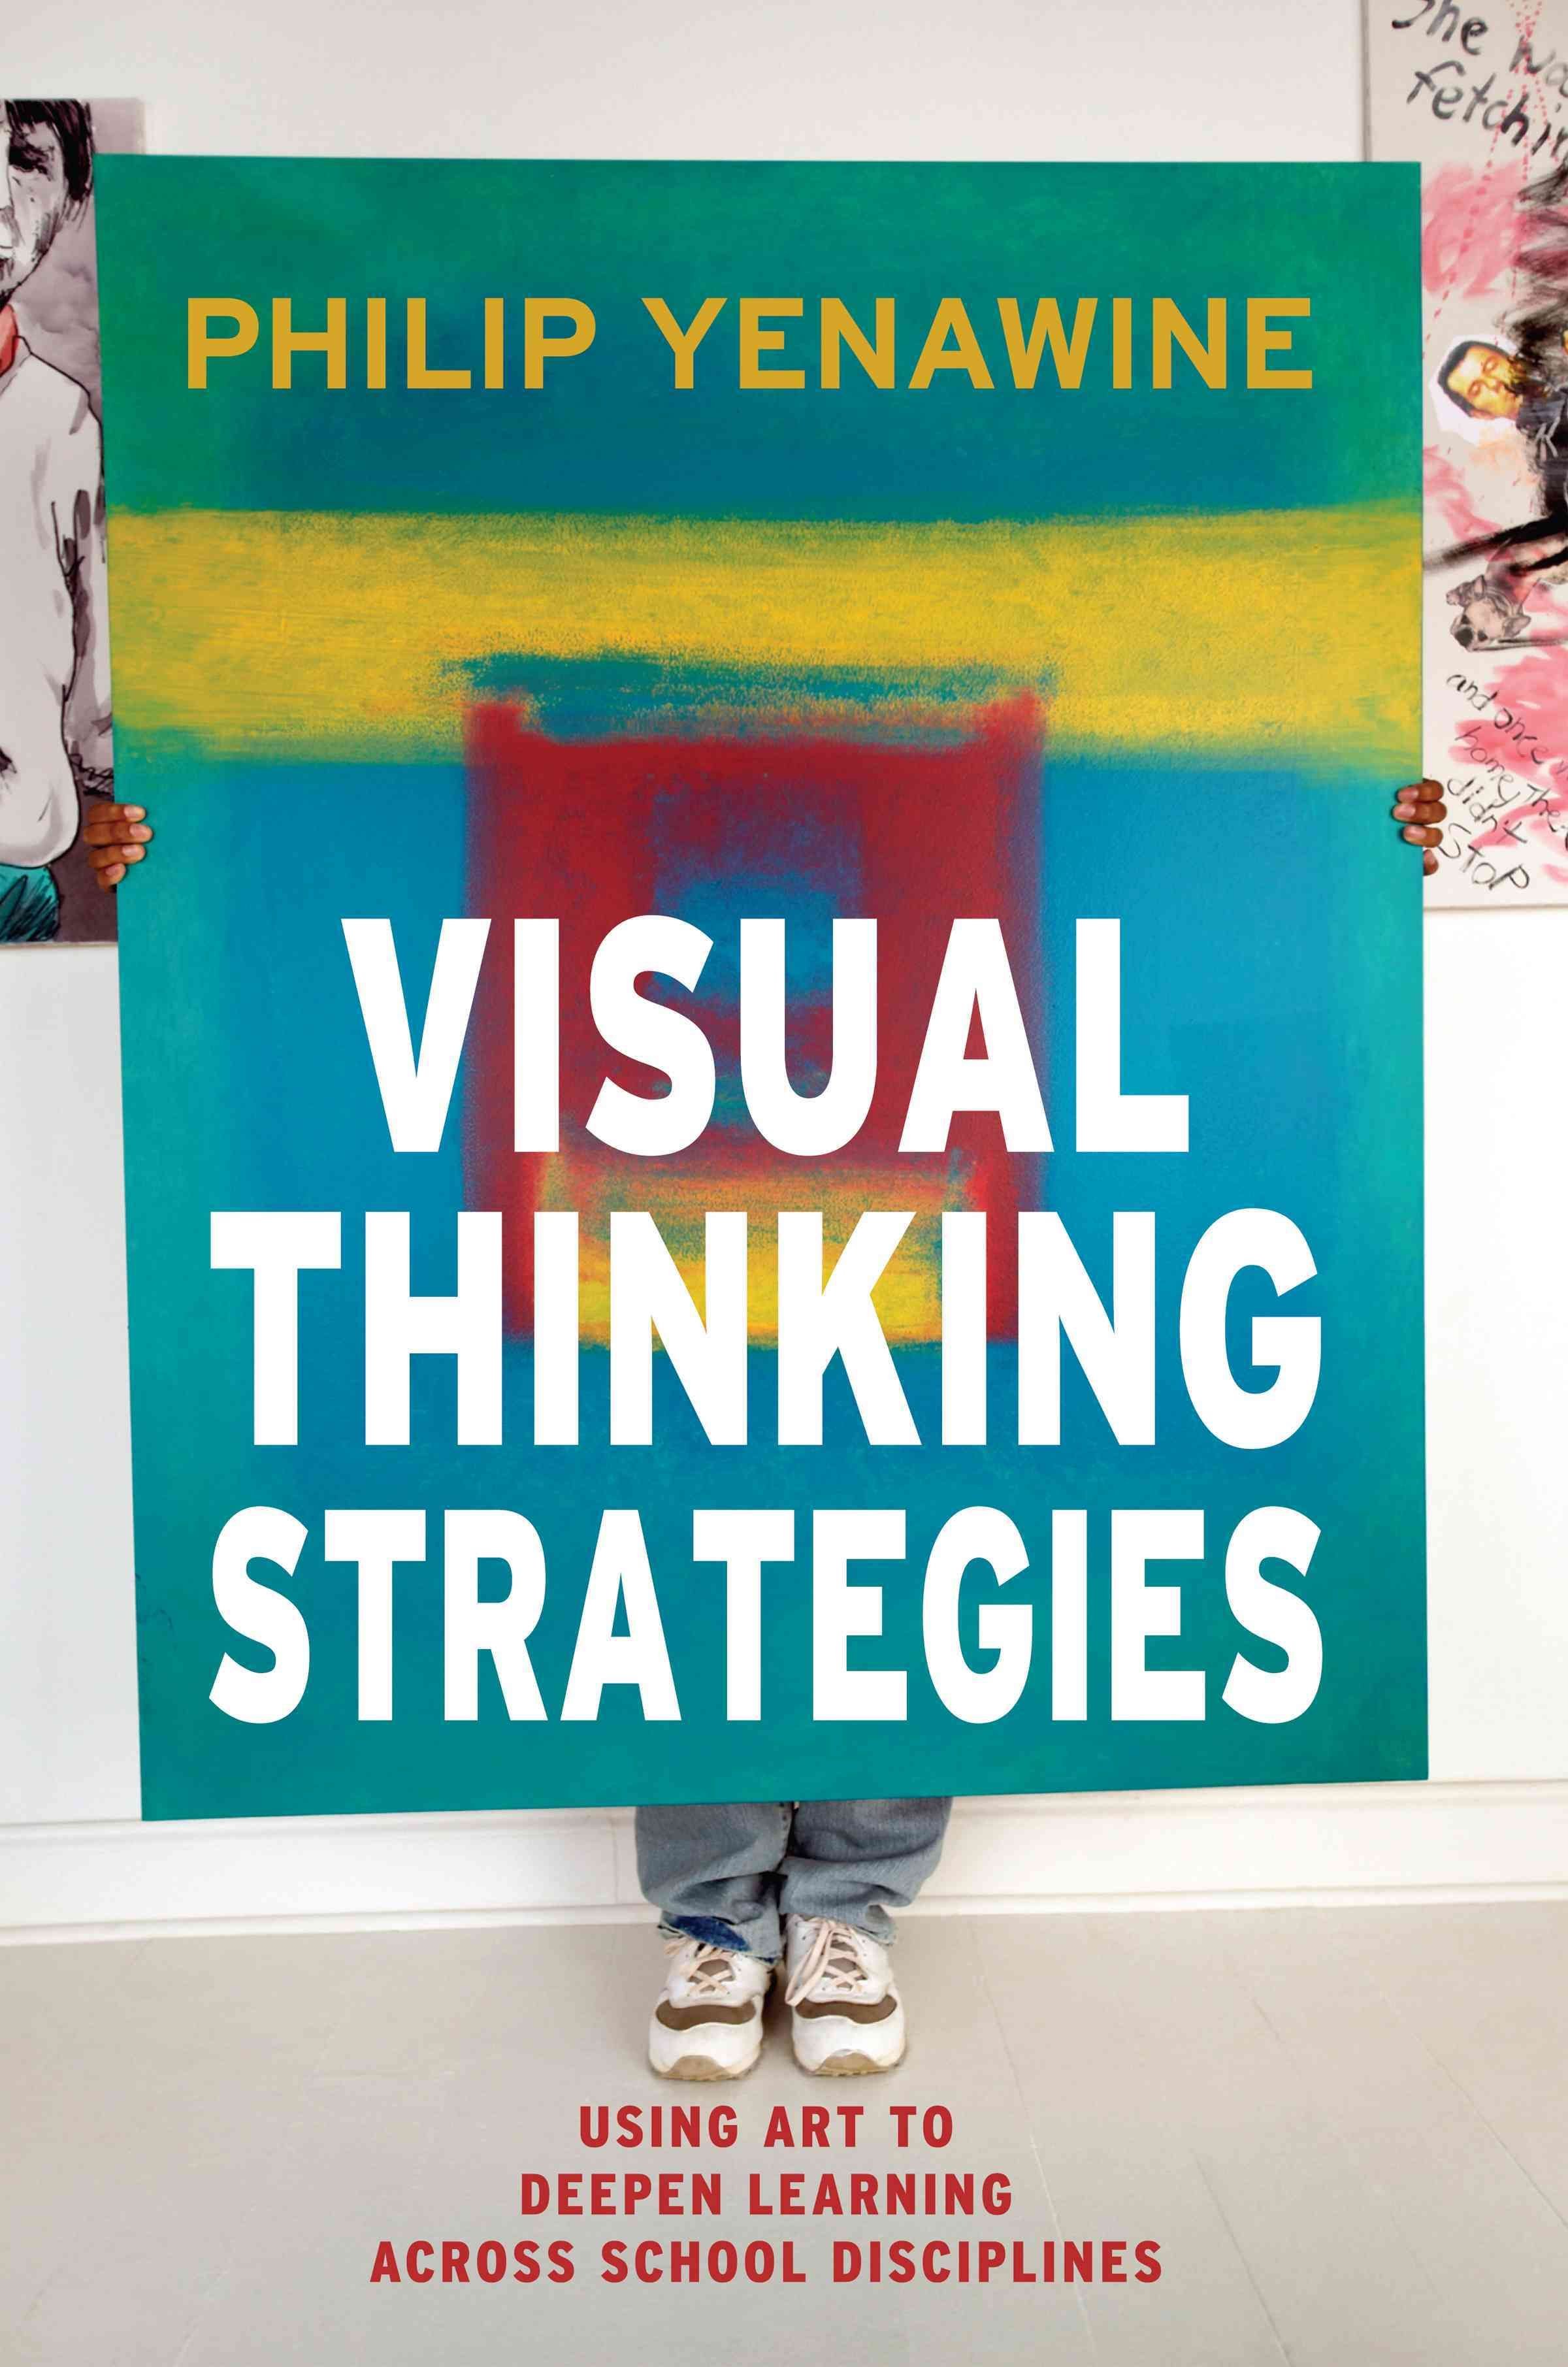 visual thinking strategies education